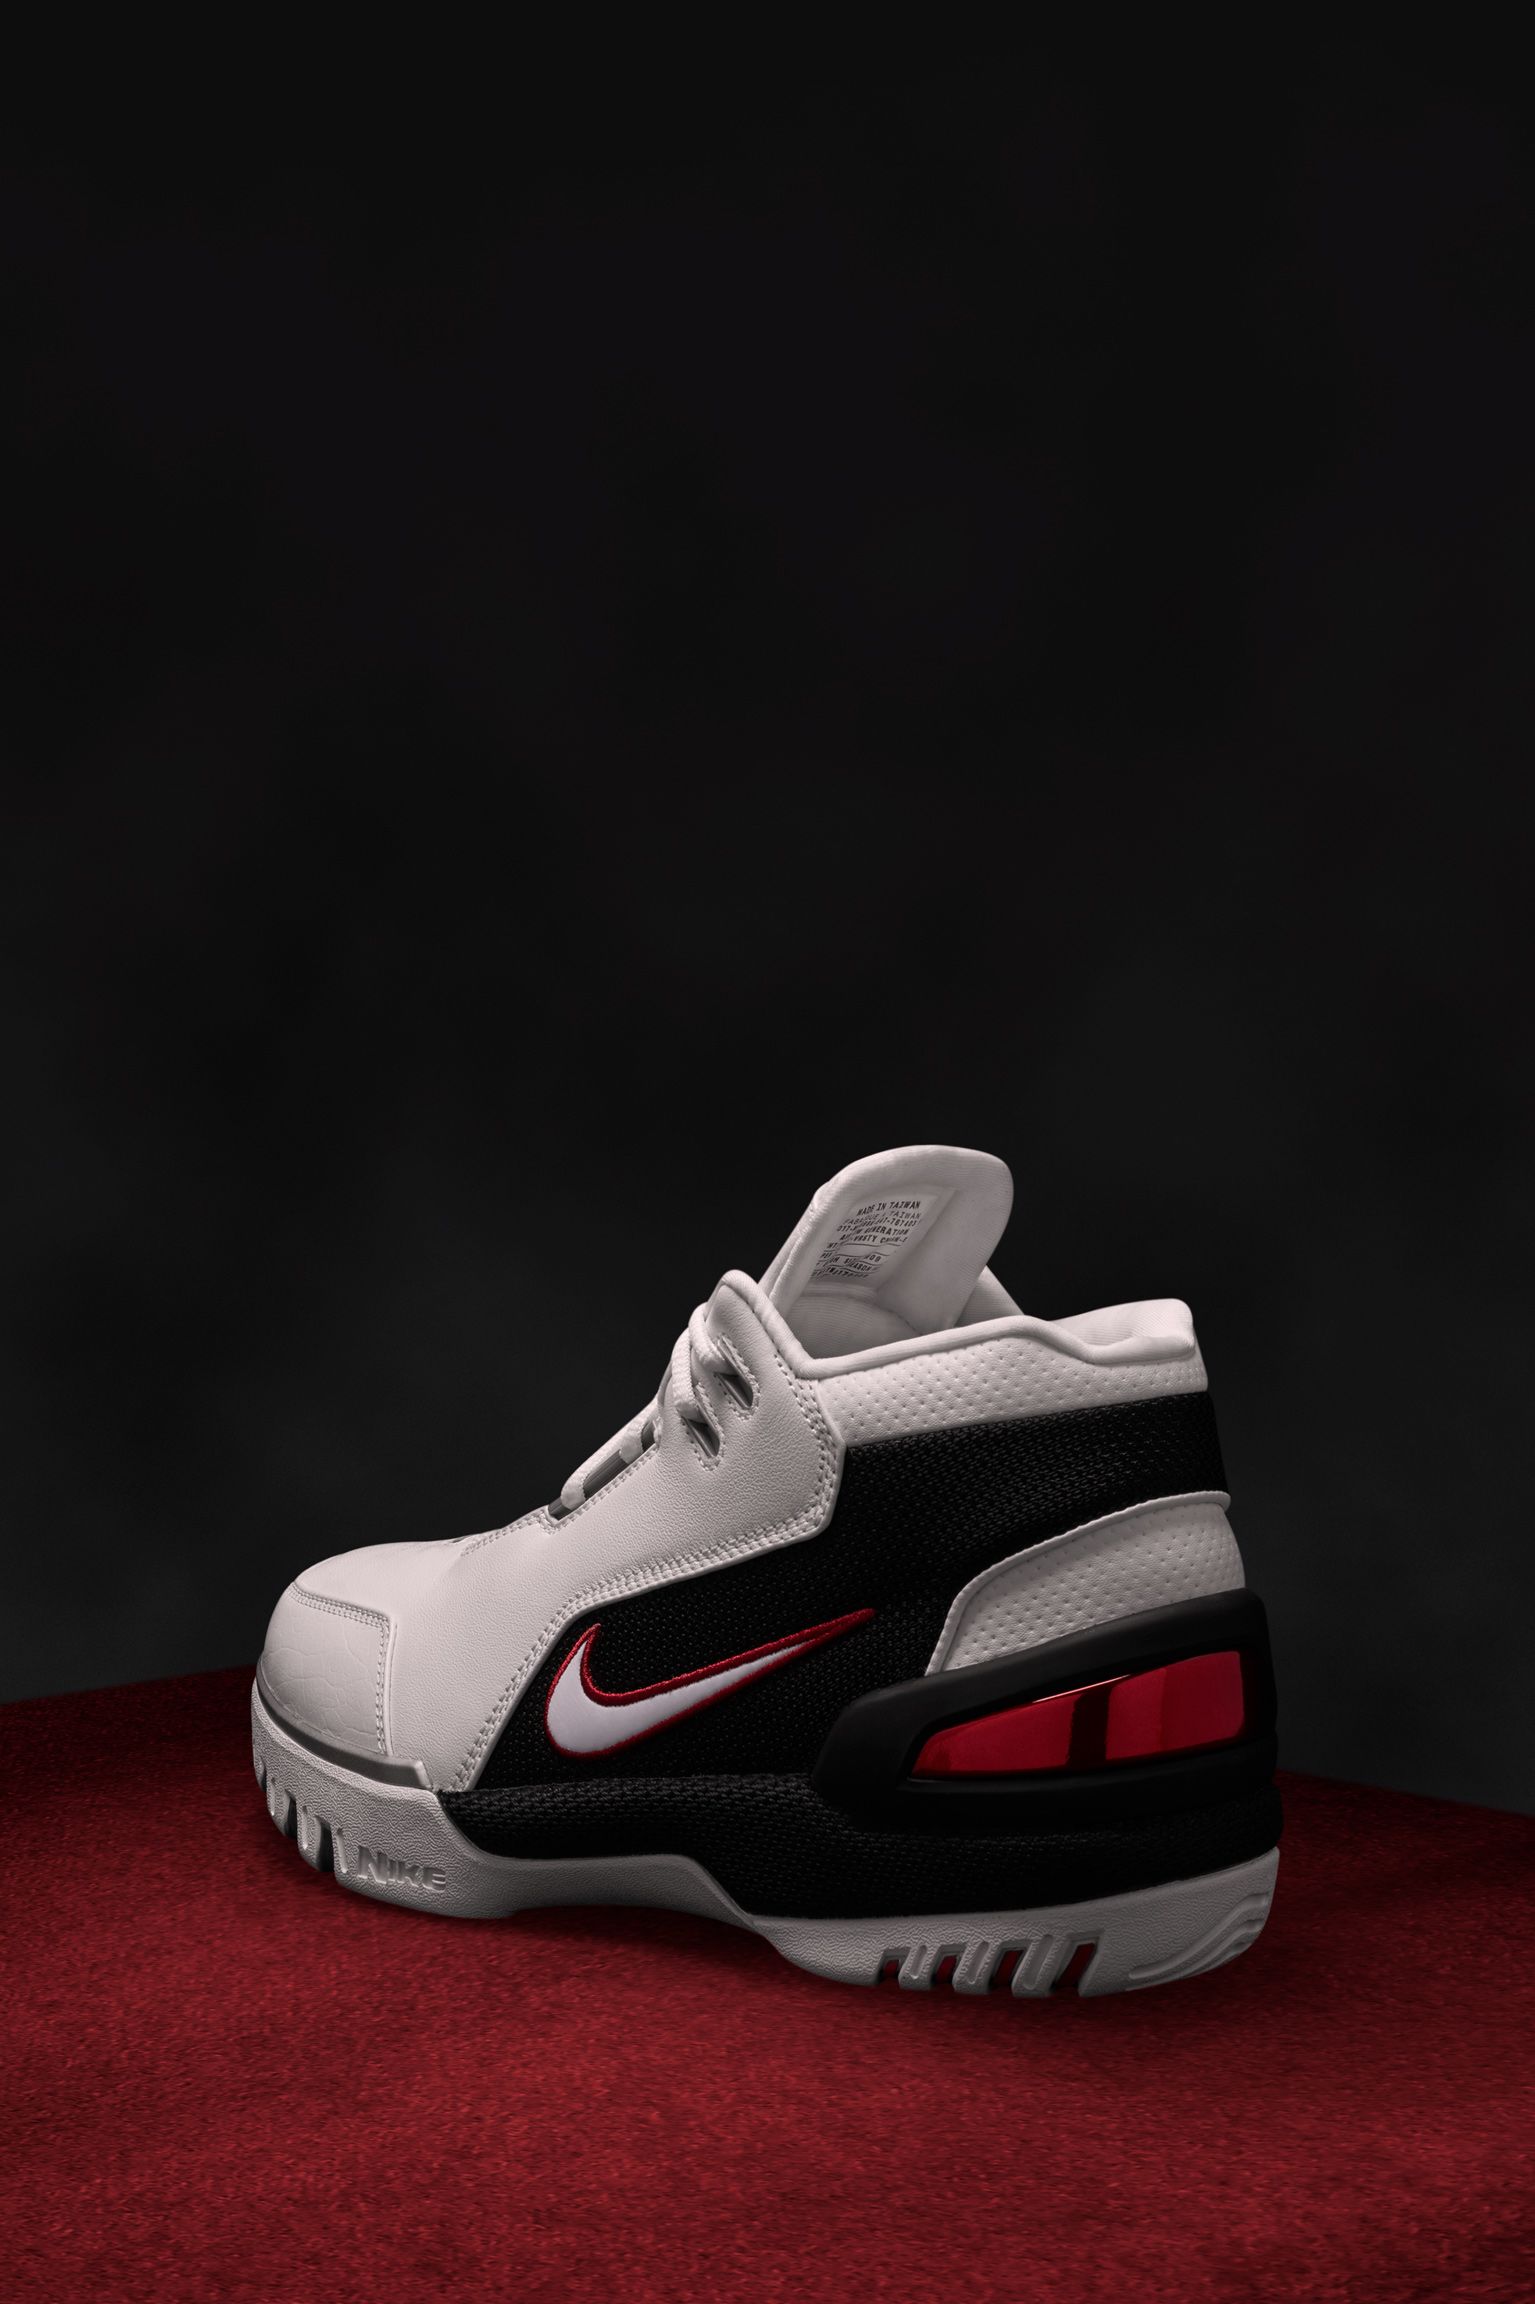 Aceptado erección Abundancia Nike Air Zoom Generation 'White & Varsity Crimson & Black' Release Date.  Nike SNKRS